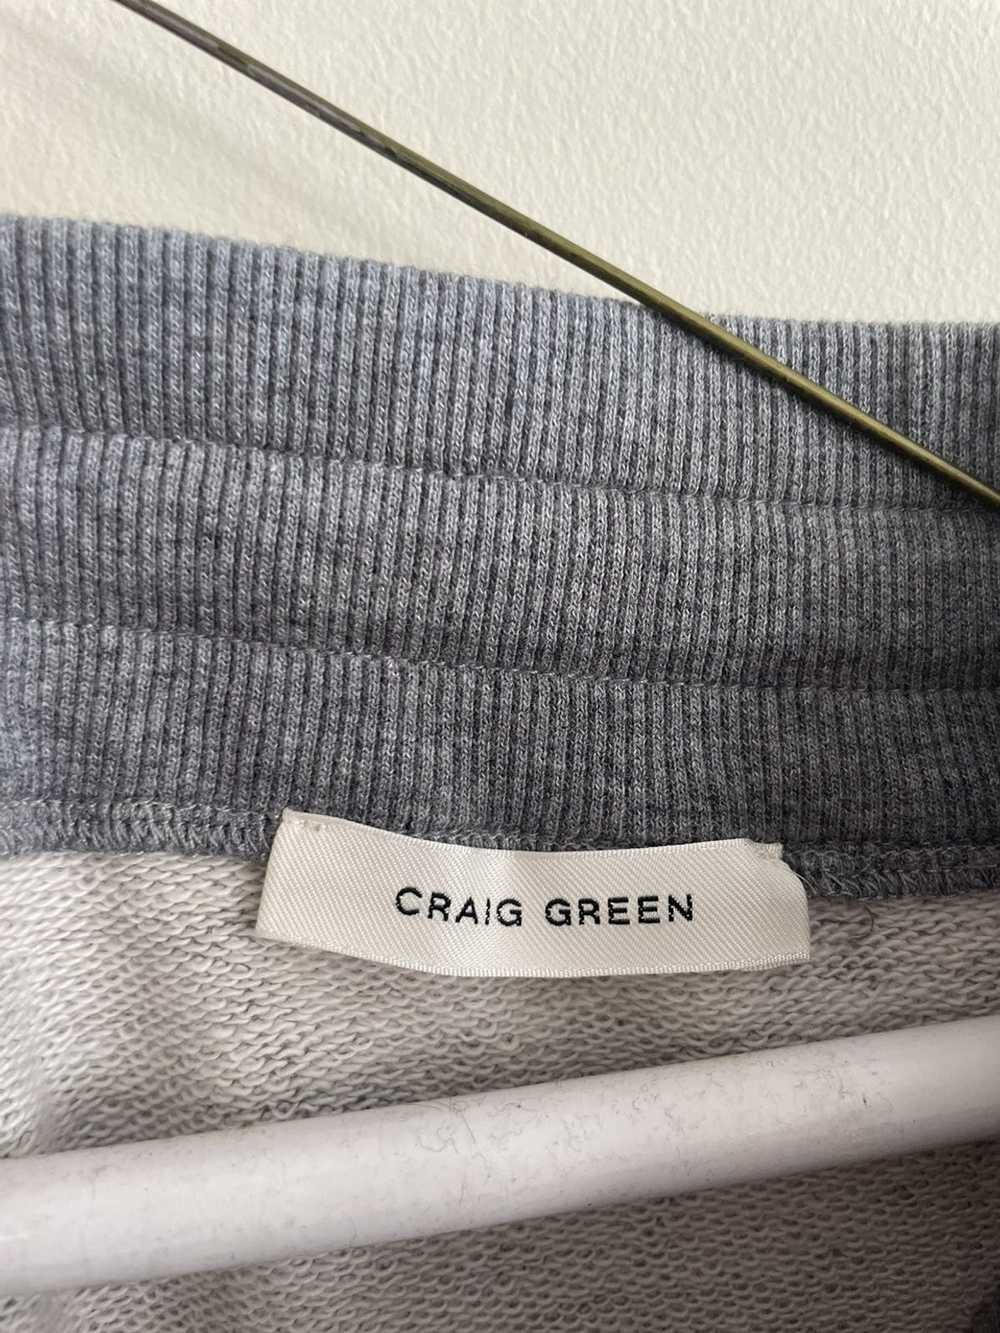 Craig Green Grey Laced Sweatpants - image 4